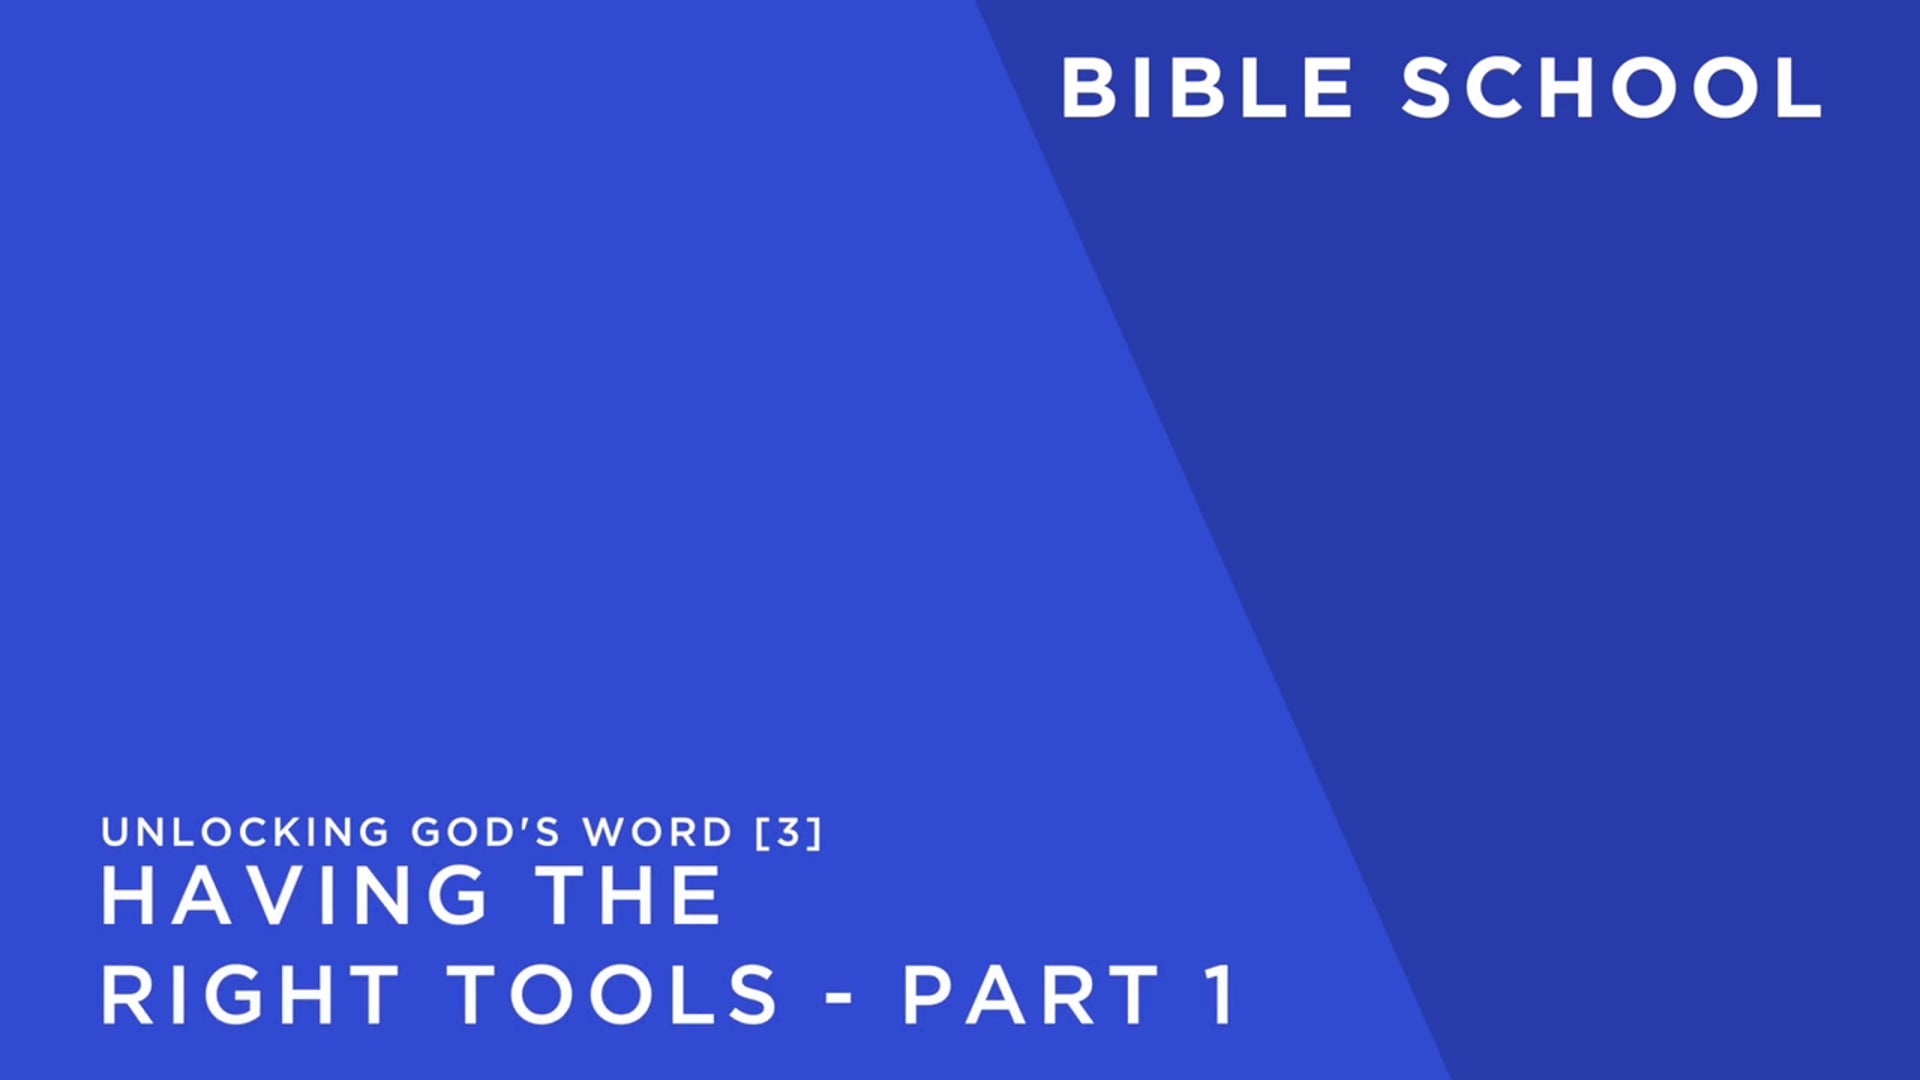 UNLOCKING GOD'S WORD 3 Having the Right Tools (PART 1)